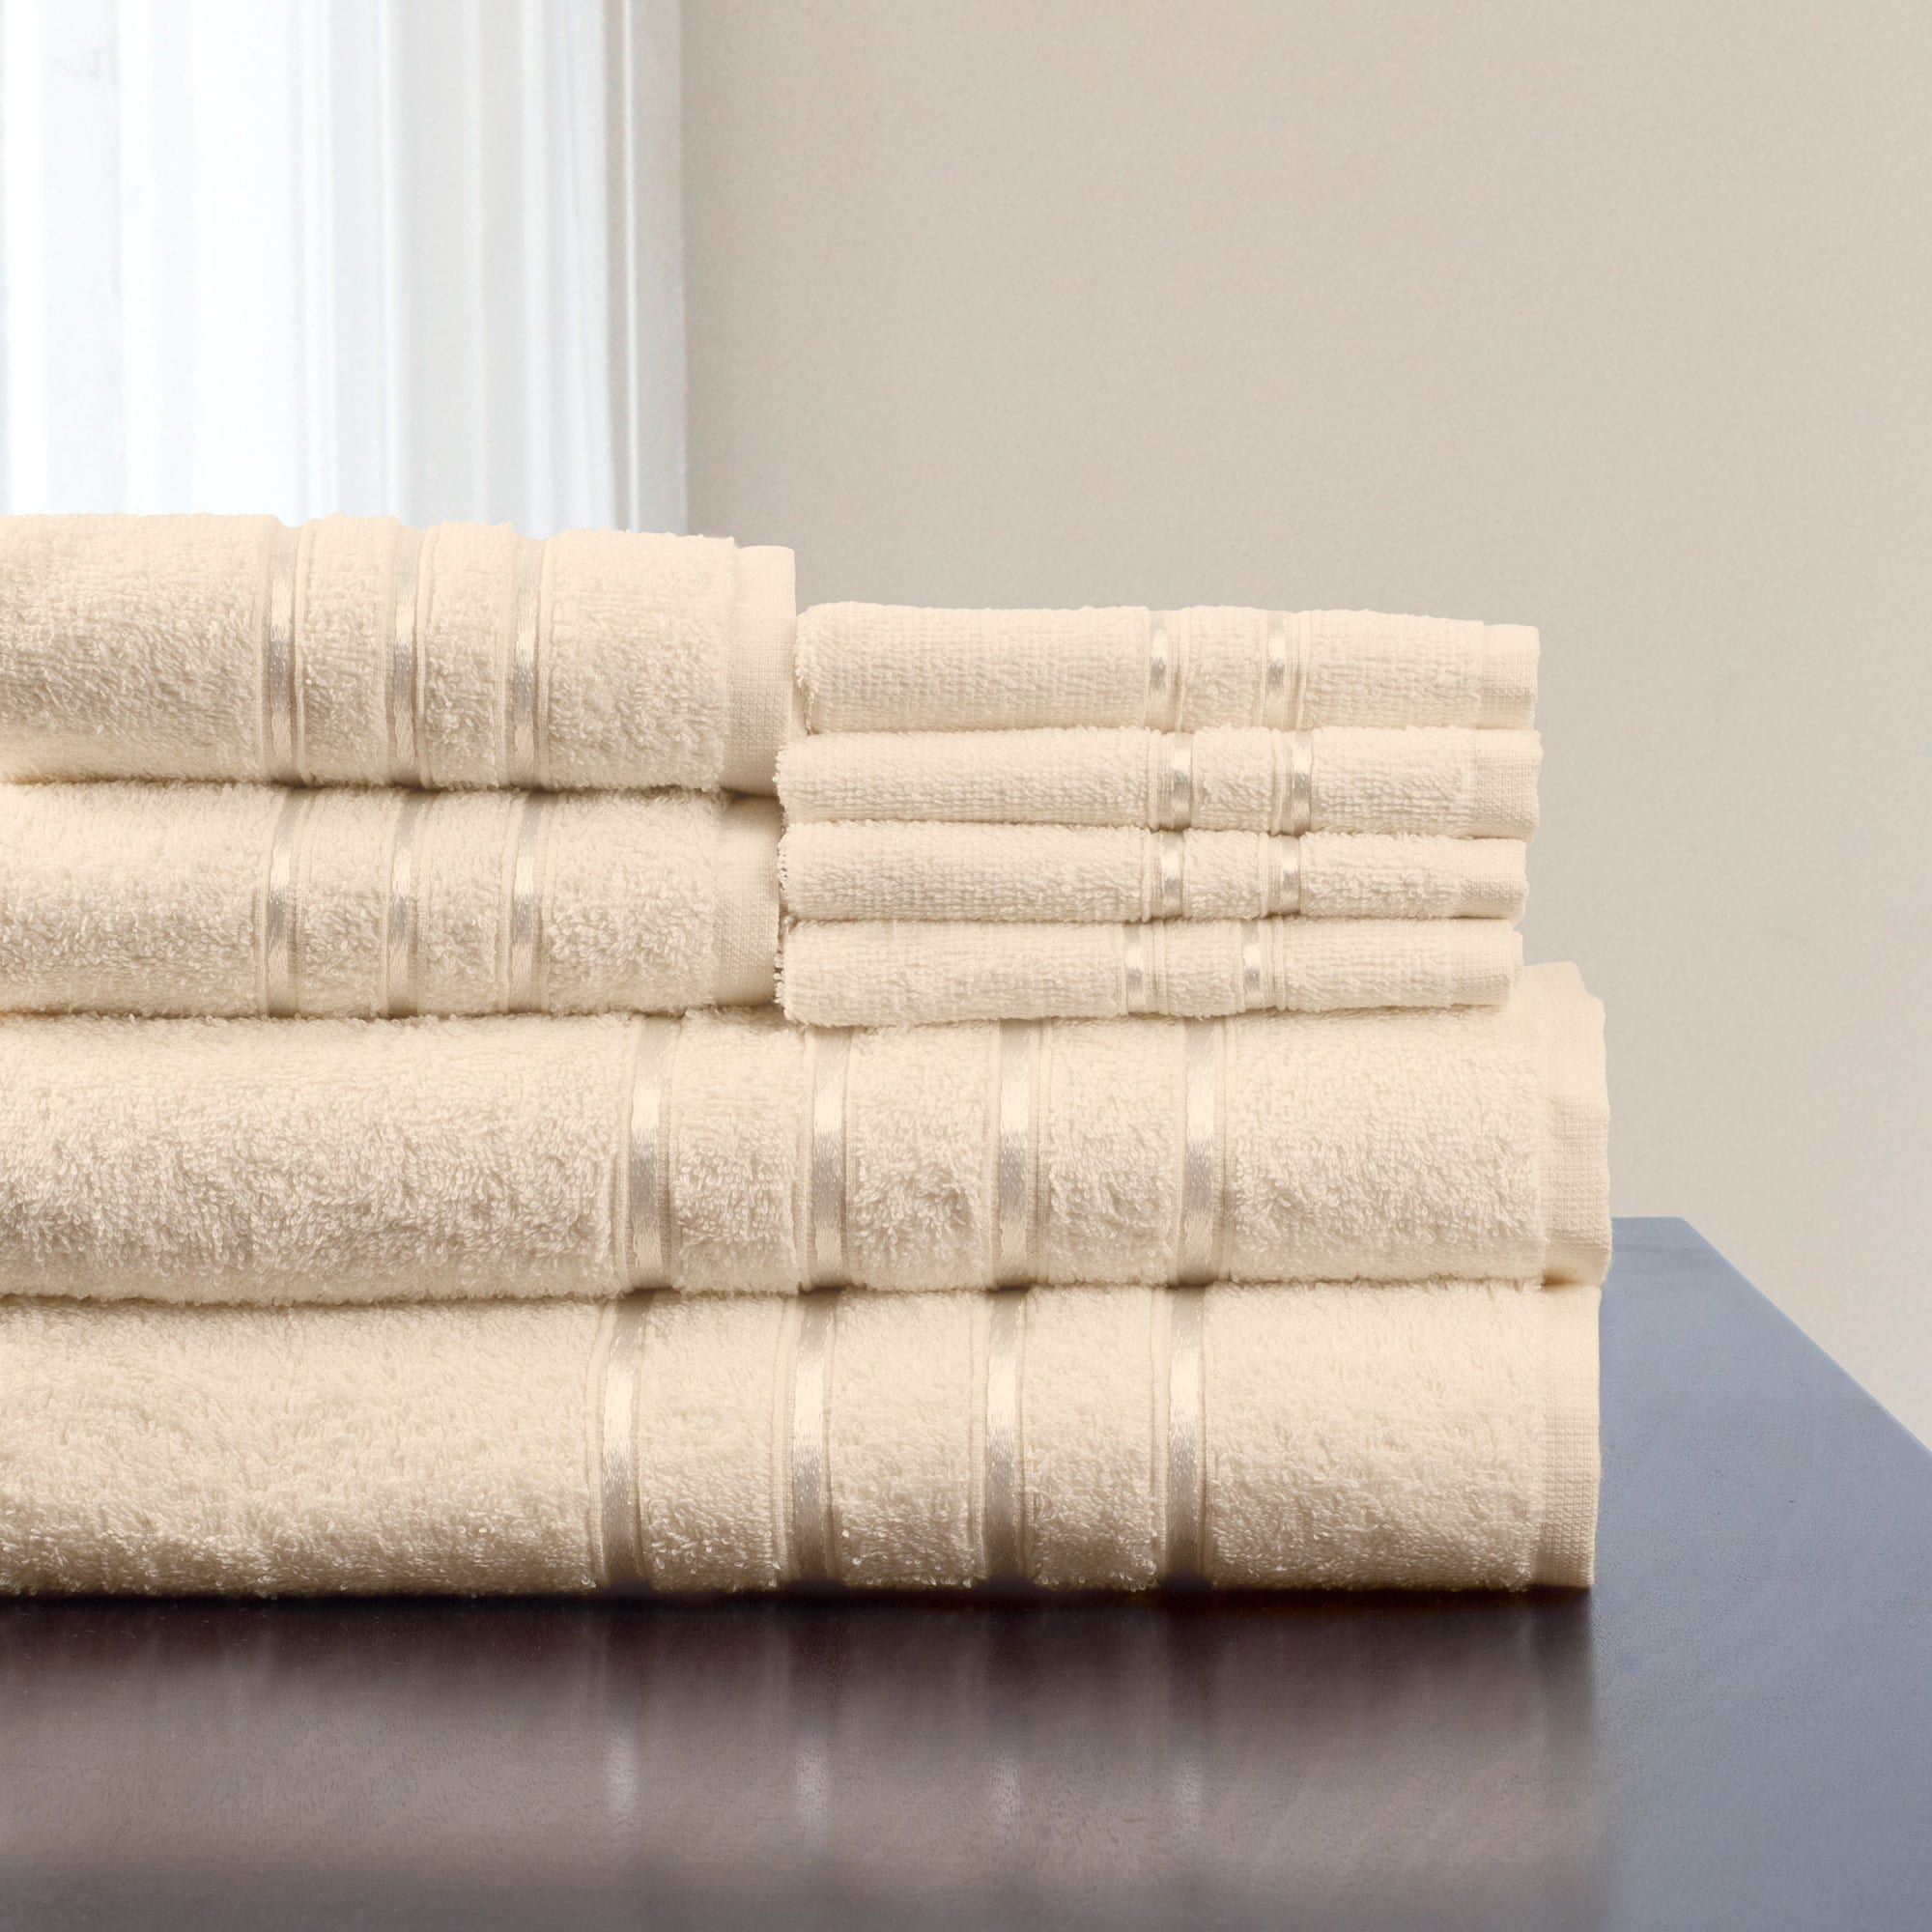 Hastings Home 6-Piece Chocolate Cotton Bath Towel Set (Bath Towels)